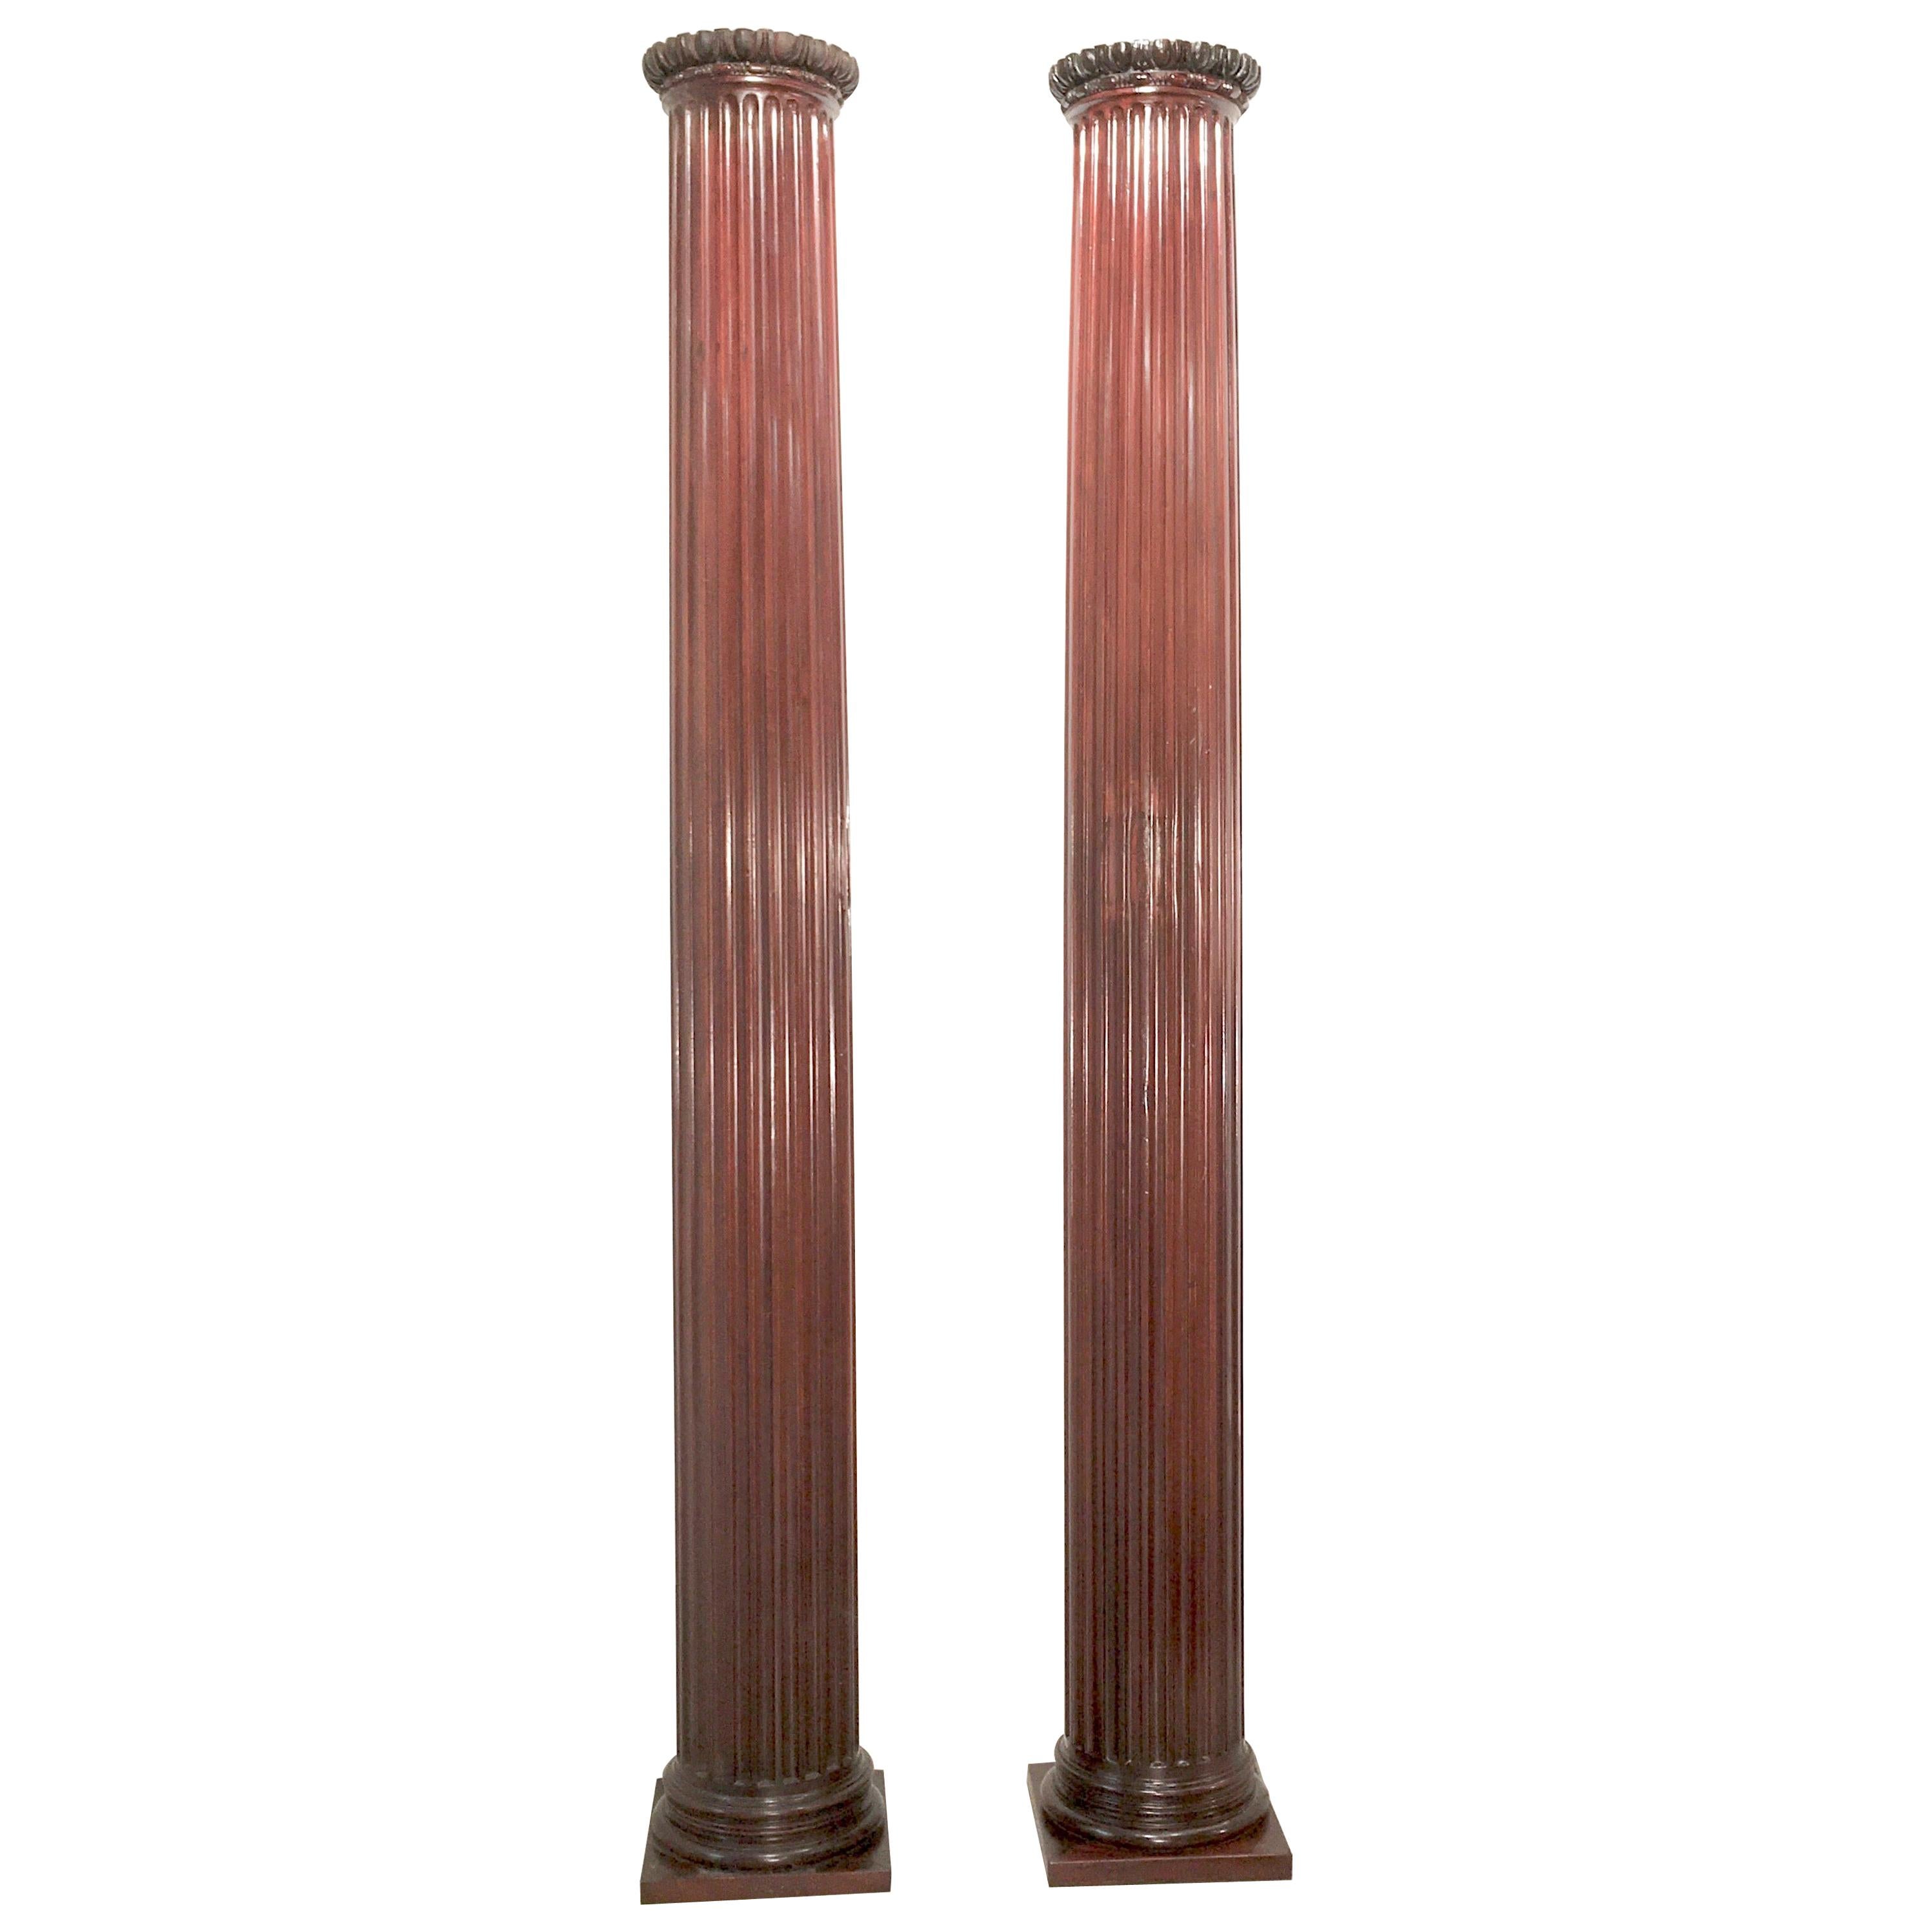 Pair of Classical Mahogany Fluted Columns